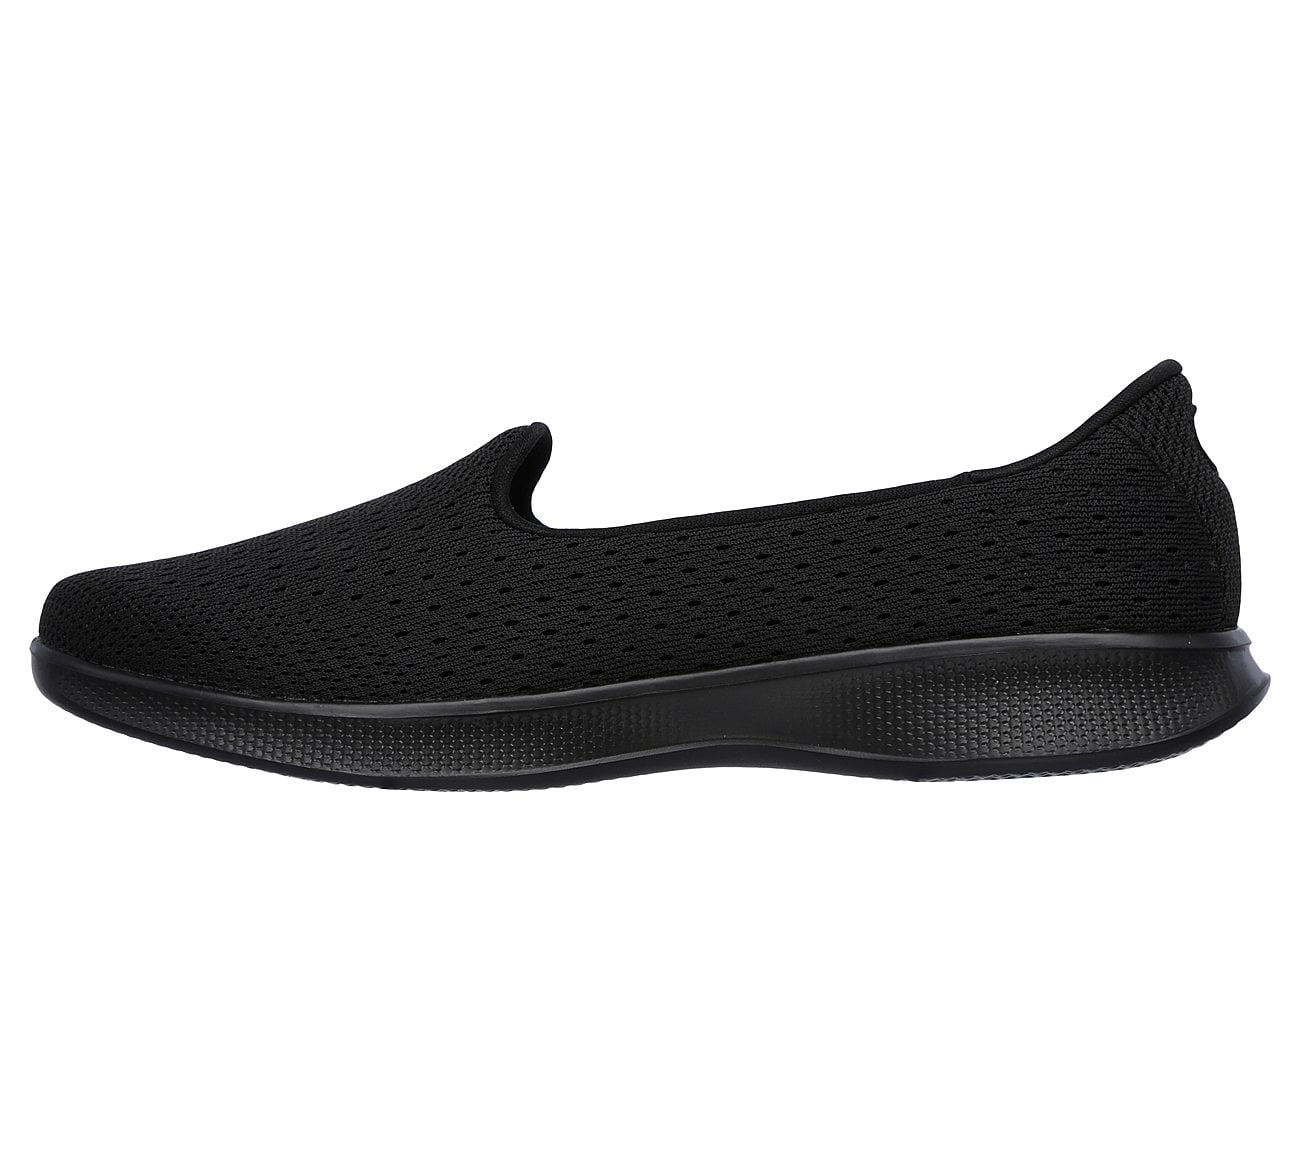 Skechers Performance Women's Go Step Lite Origin Slip-on Shoe,Black,7 M US Walmart.com